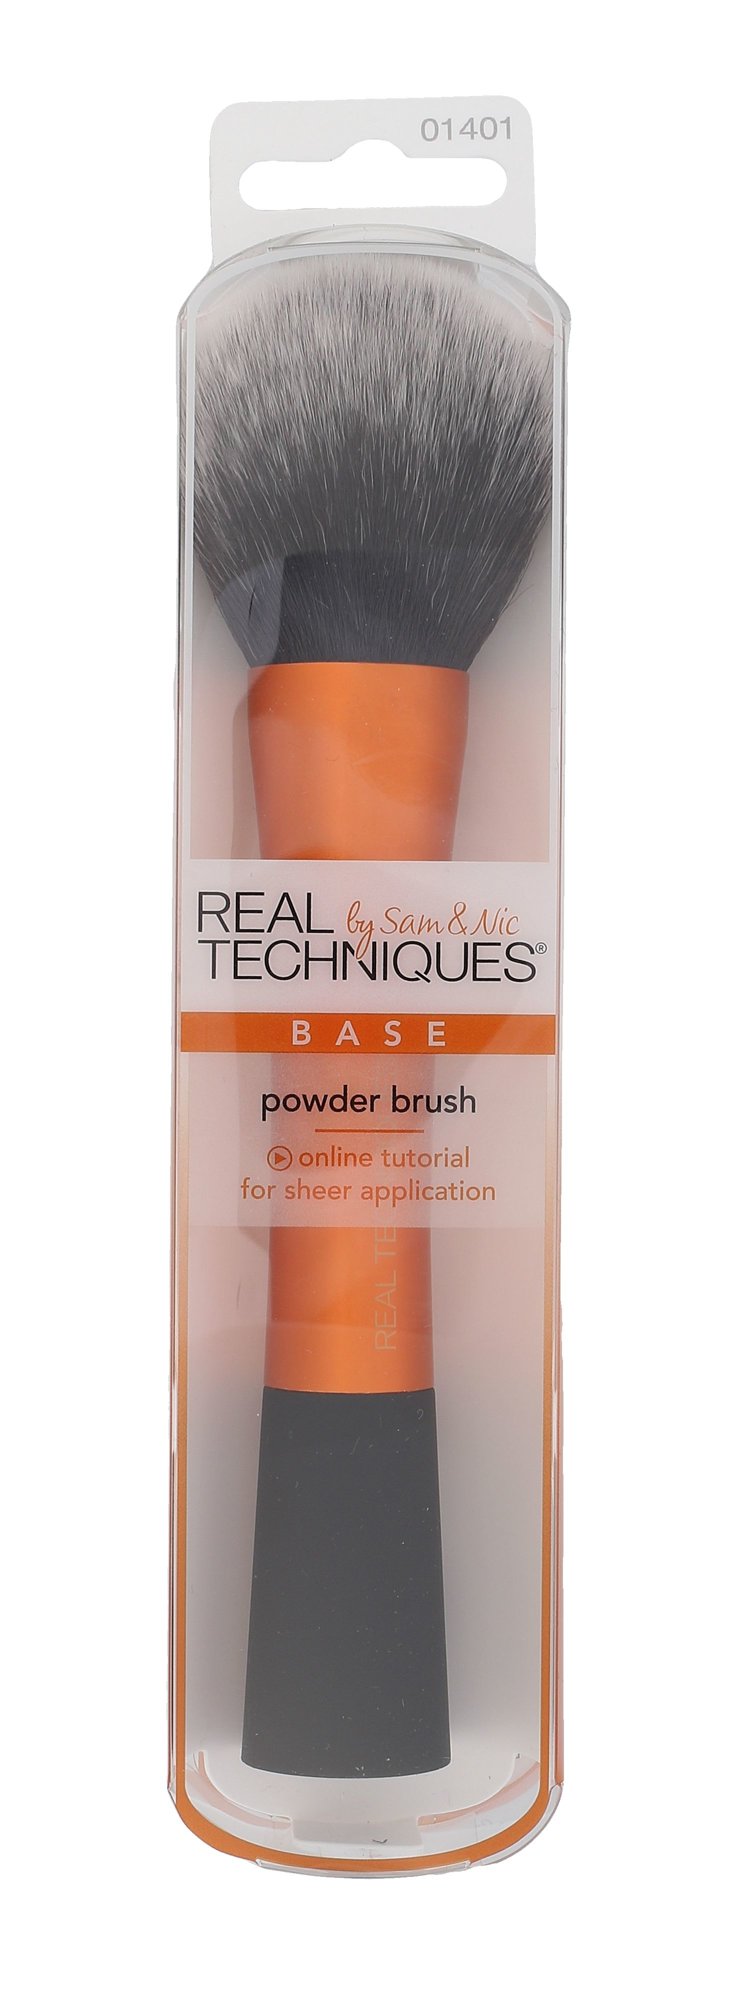 Real Techniques Base Powder Brush